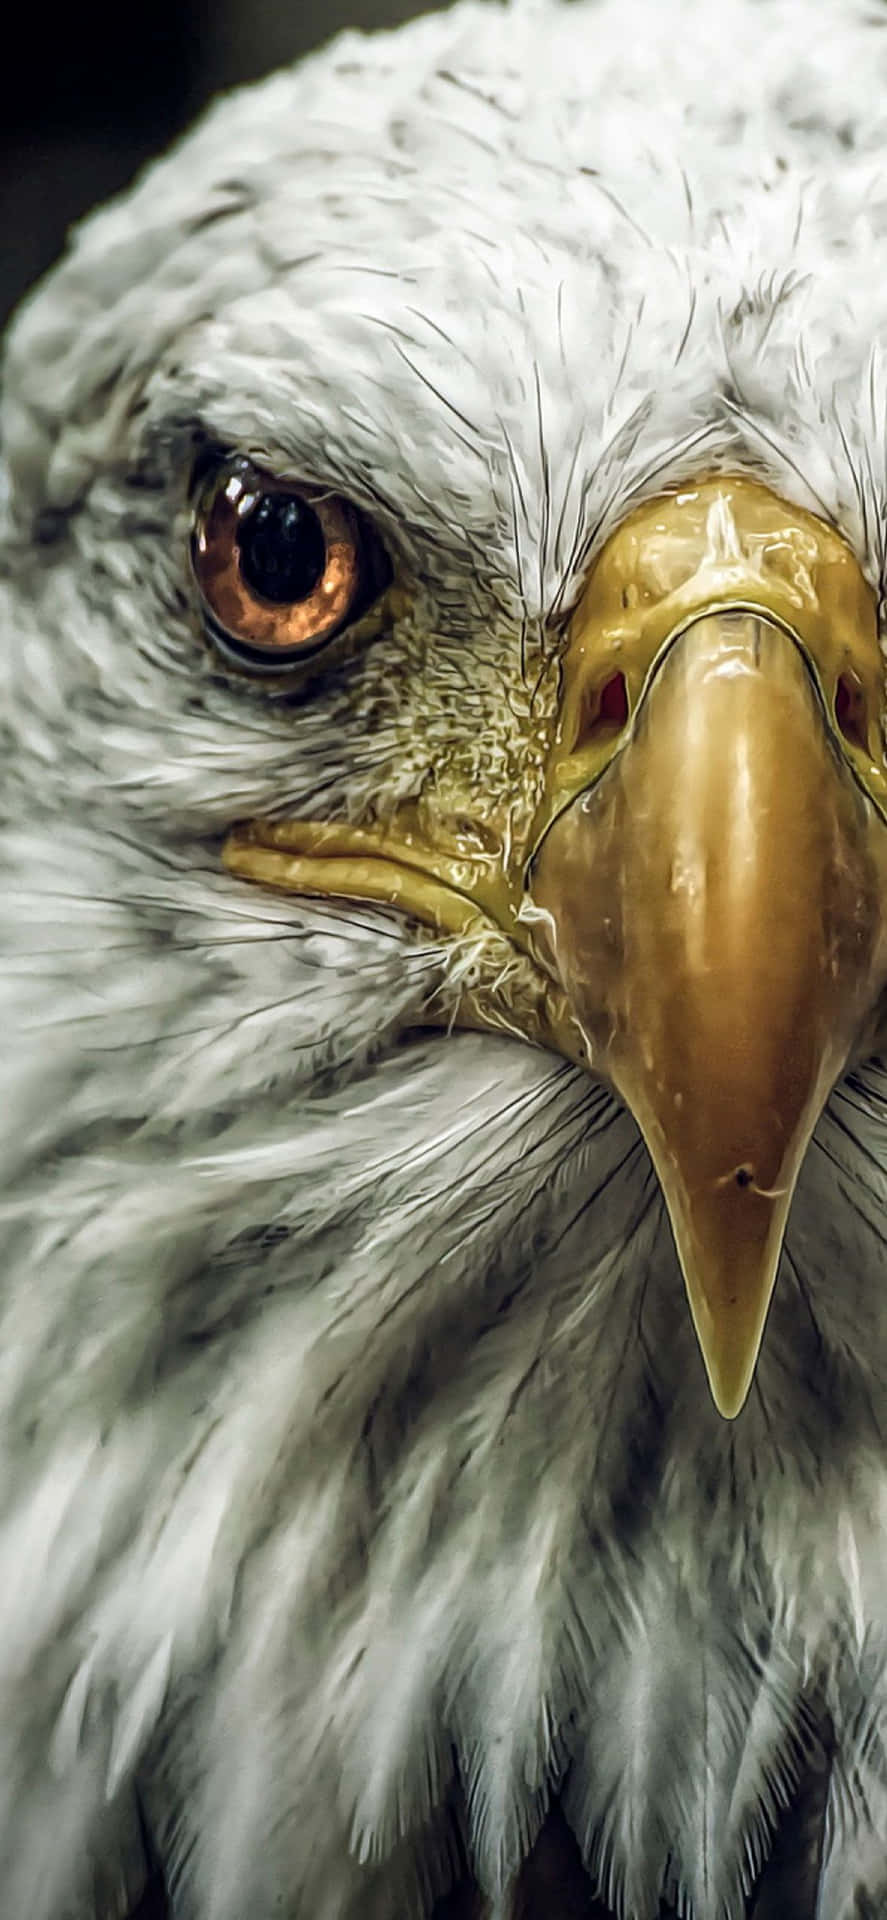 Eagle Up Close Iphone Wallpaper